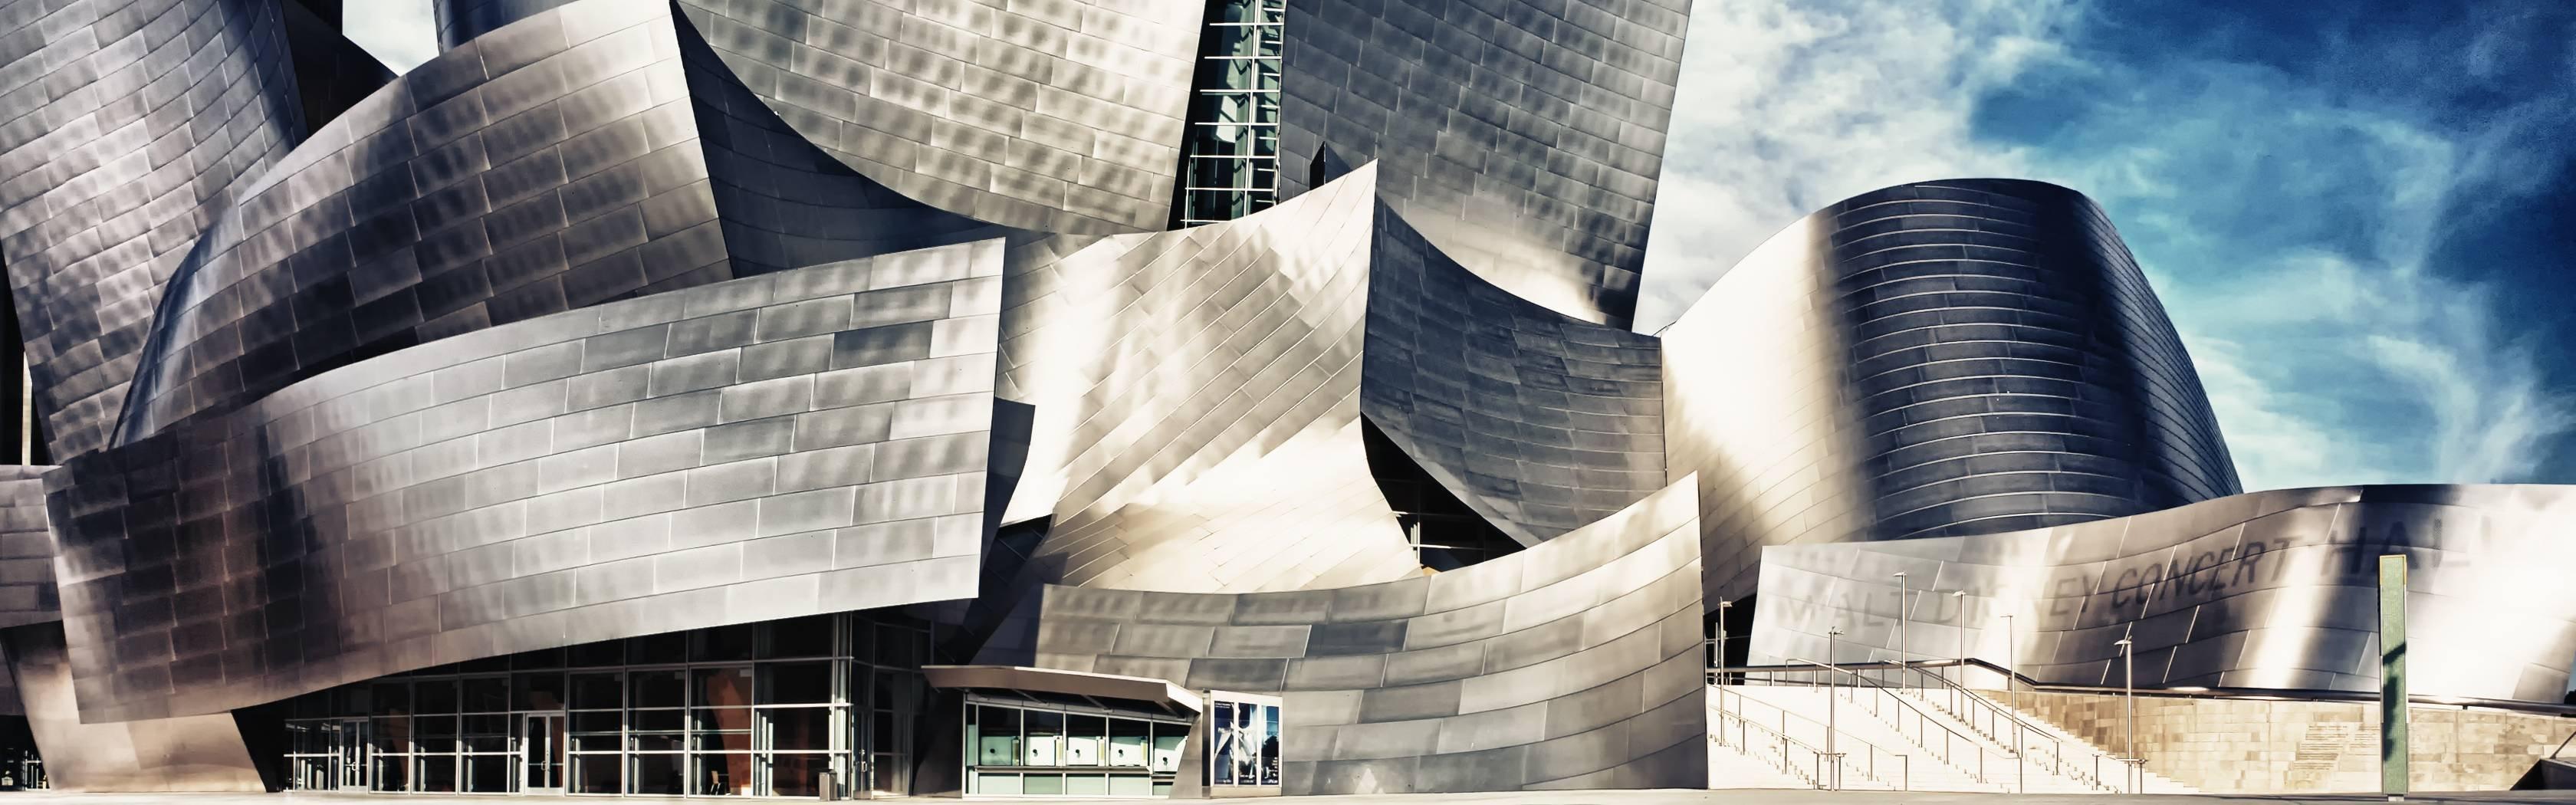 Frank Gehry Disney Concert Hall [3360x1050]